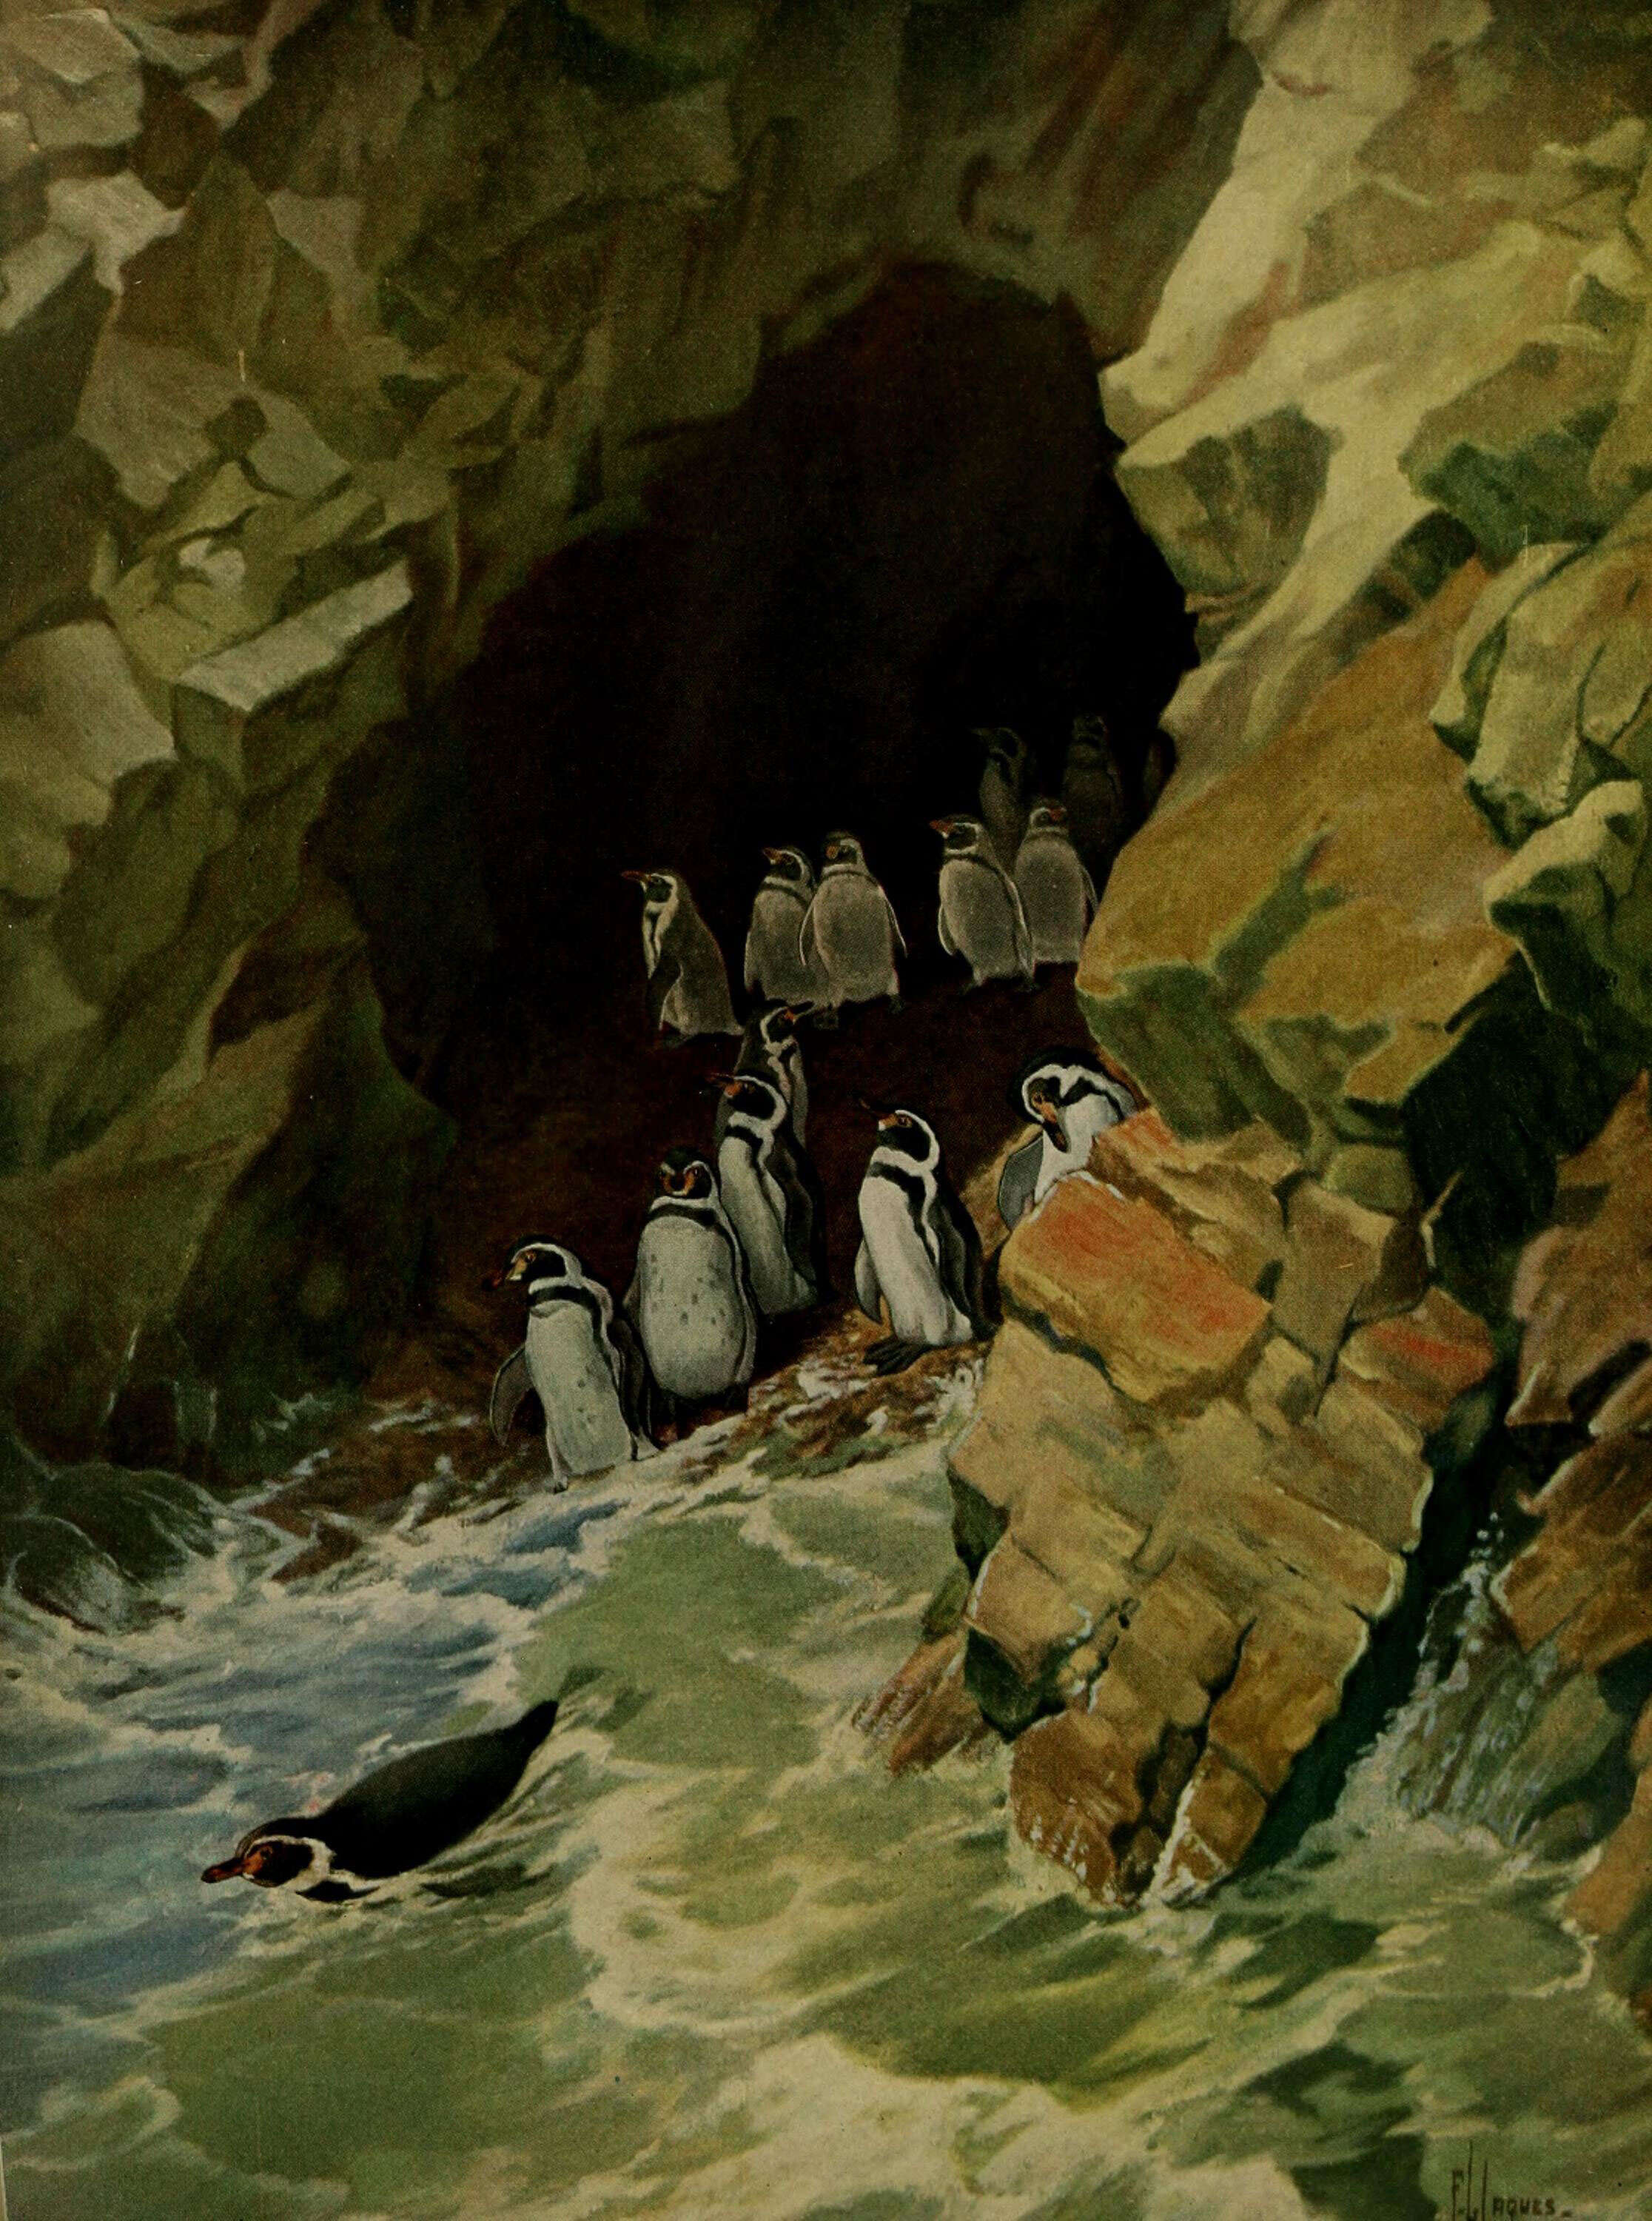 Image of penguins